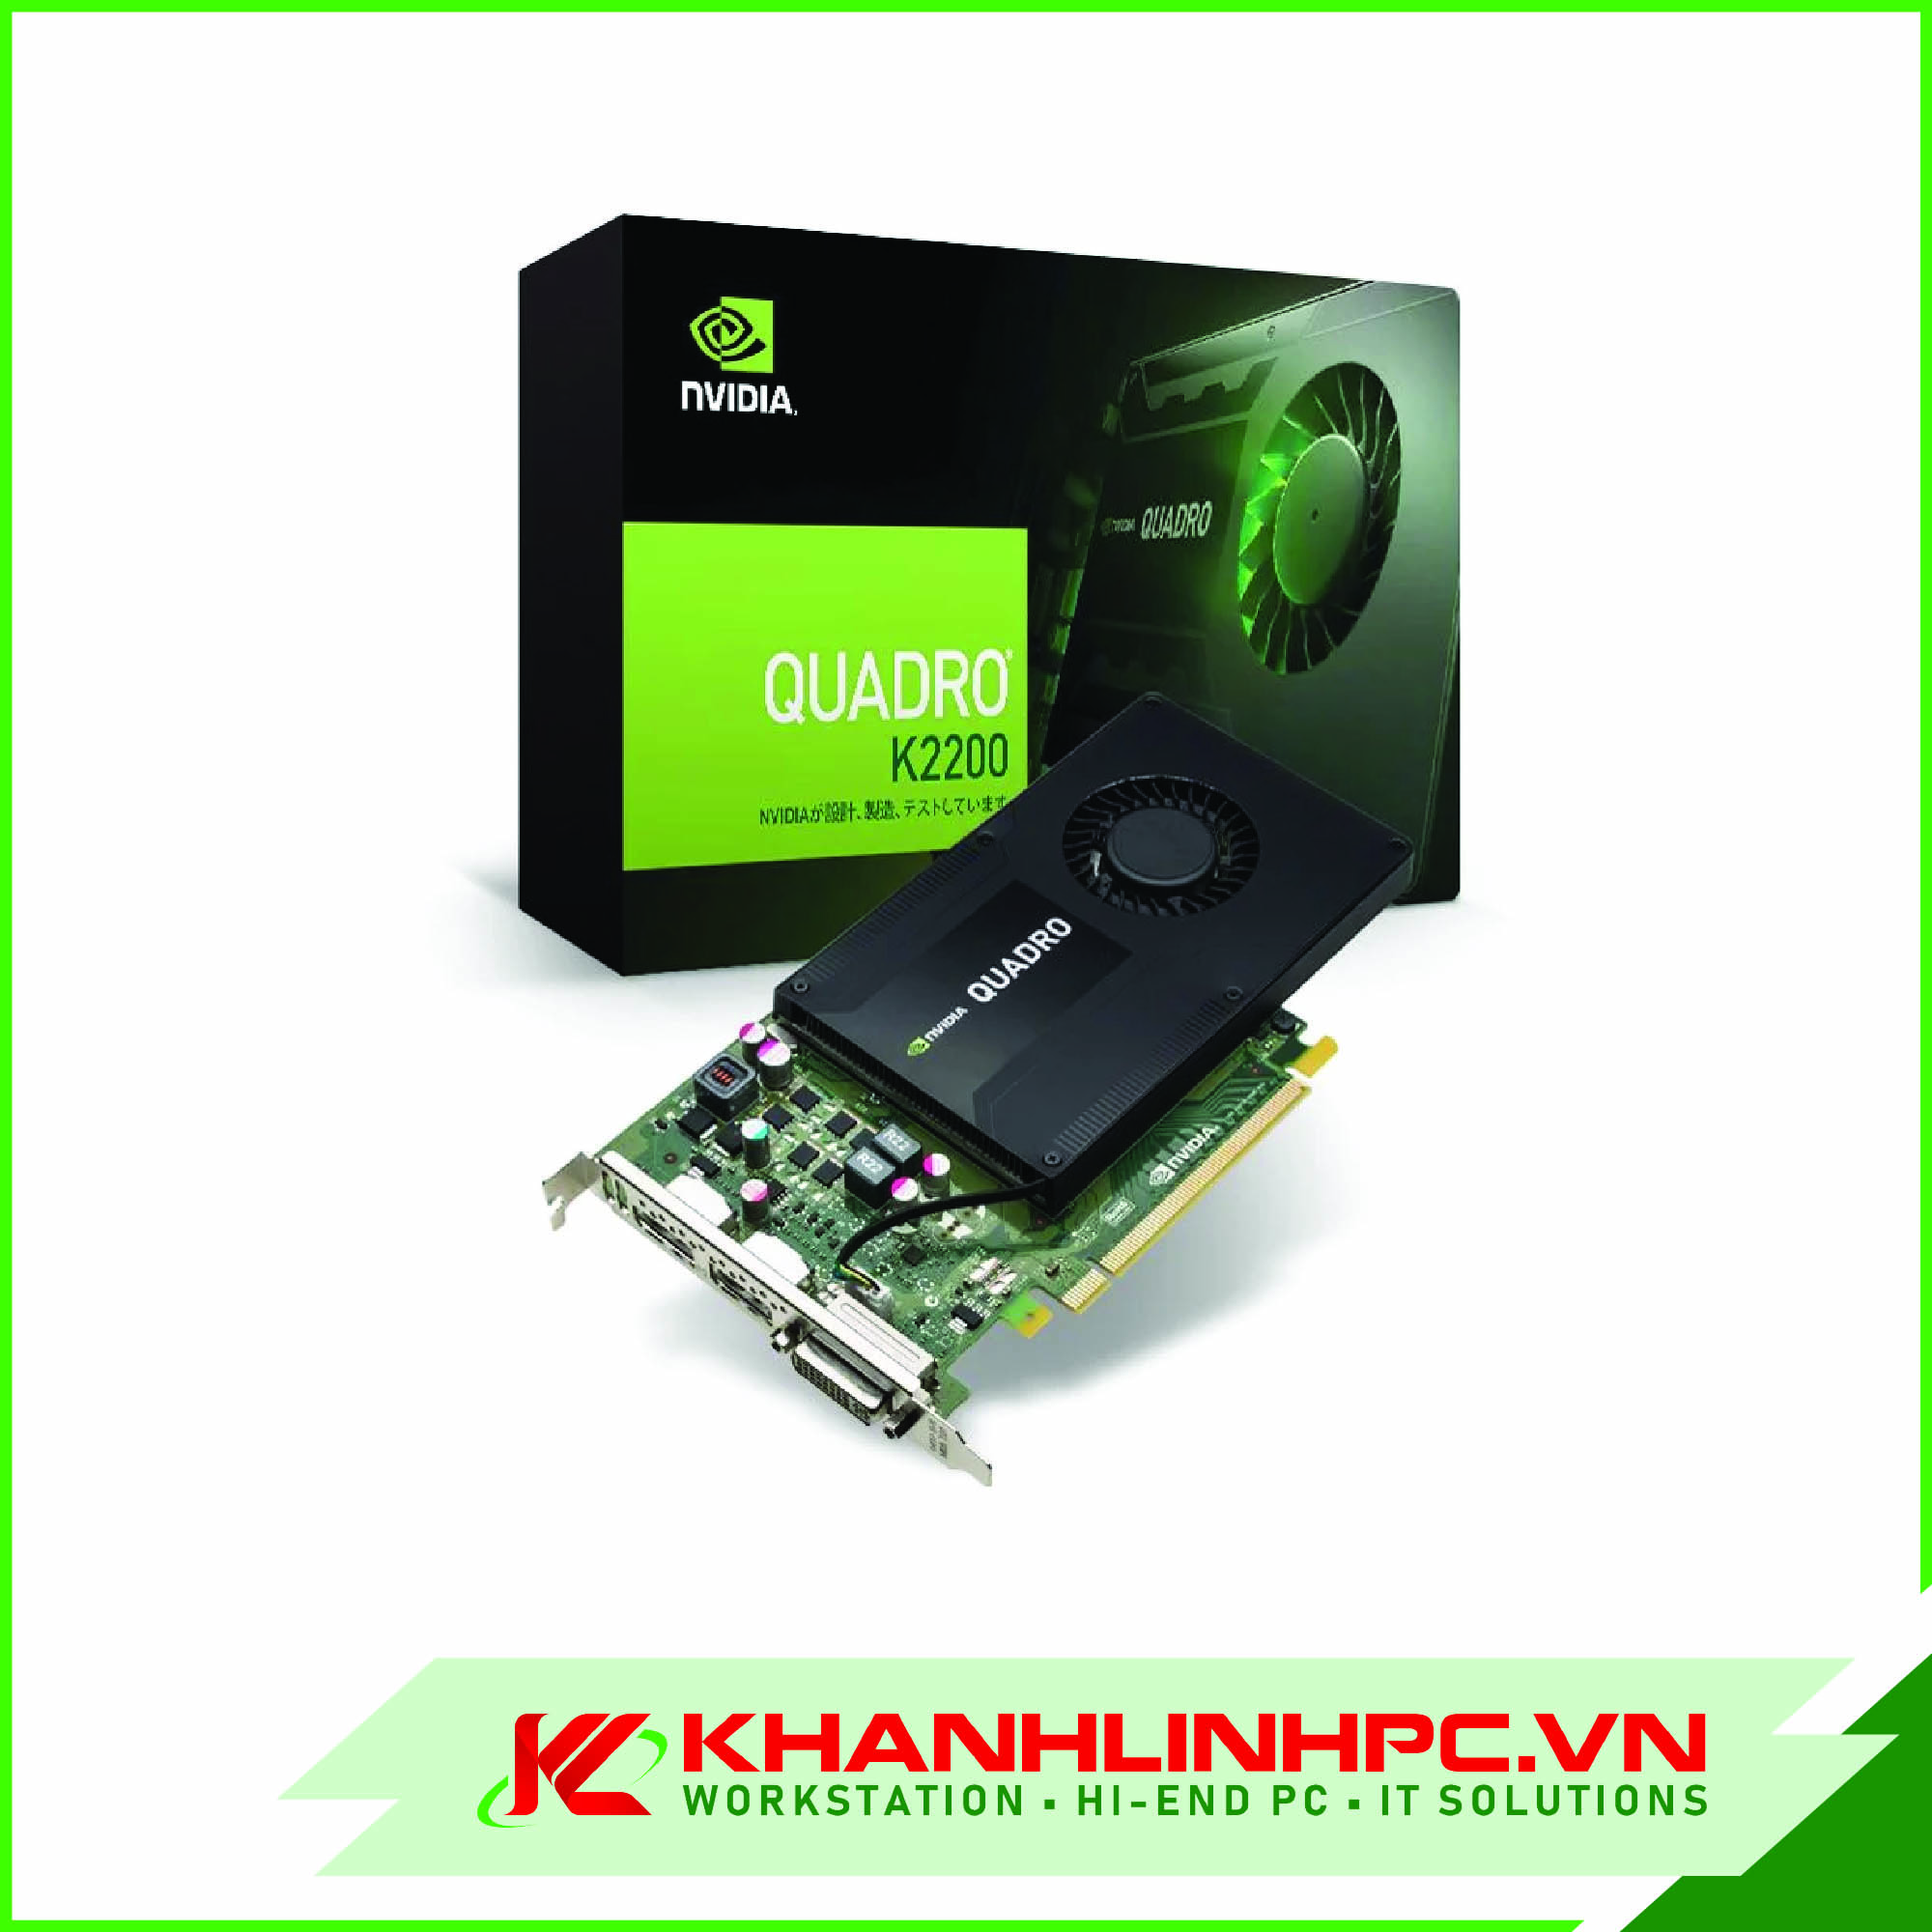 NVIDIA QUADRO K2200 4GB GDDR5